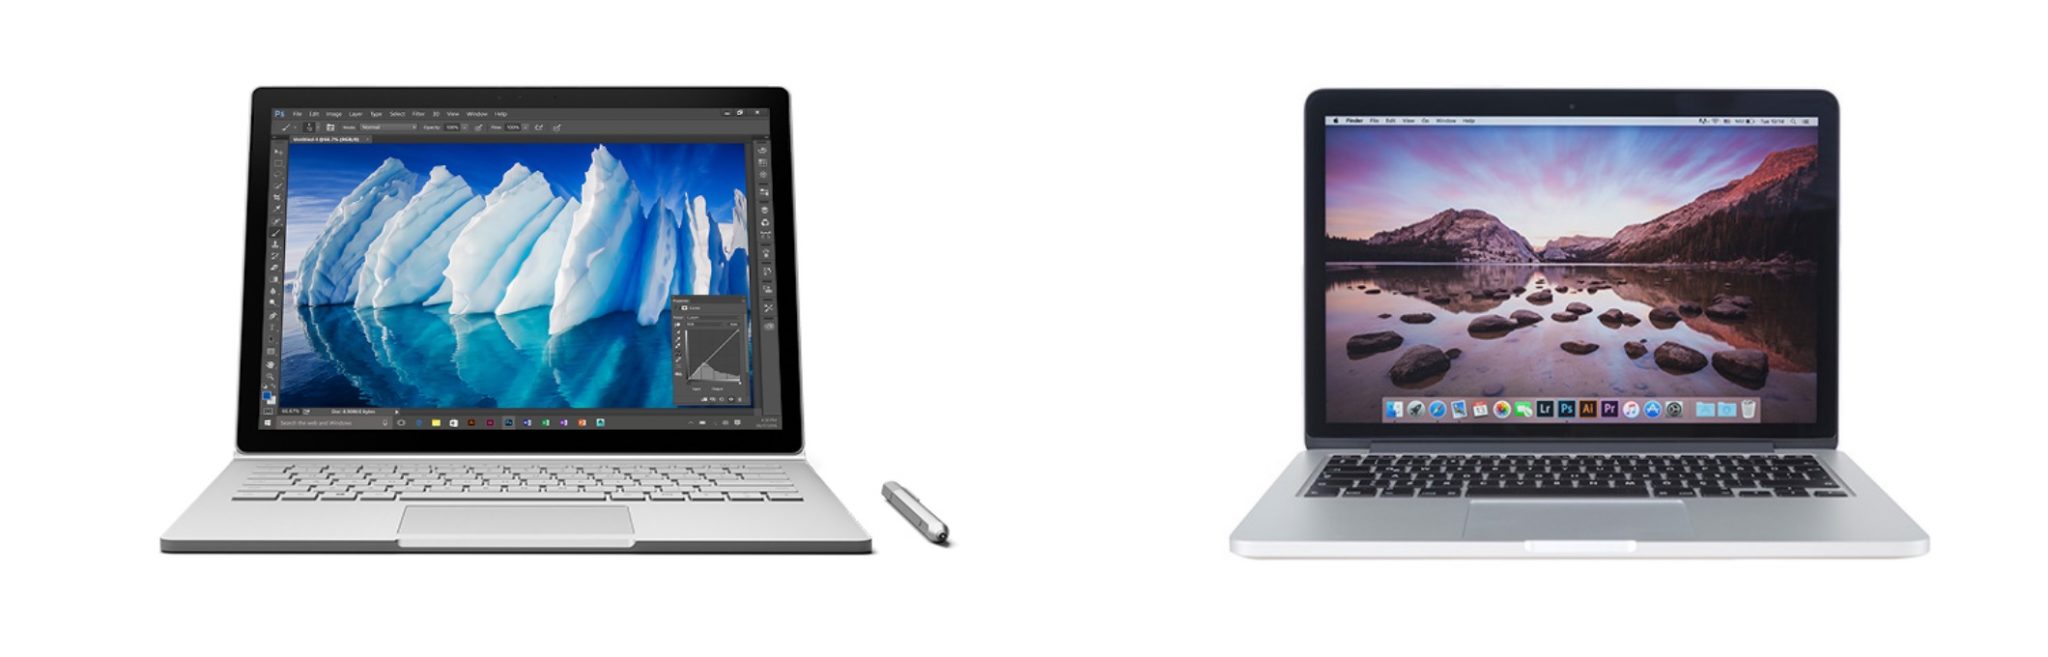 Surface Book i7 vs MacBook Pro 2016